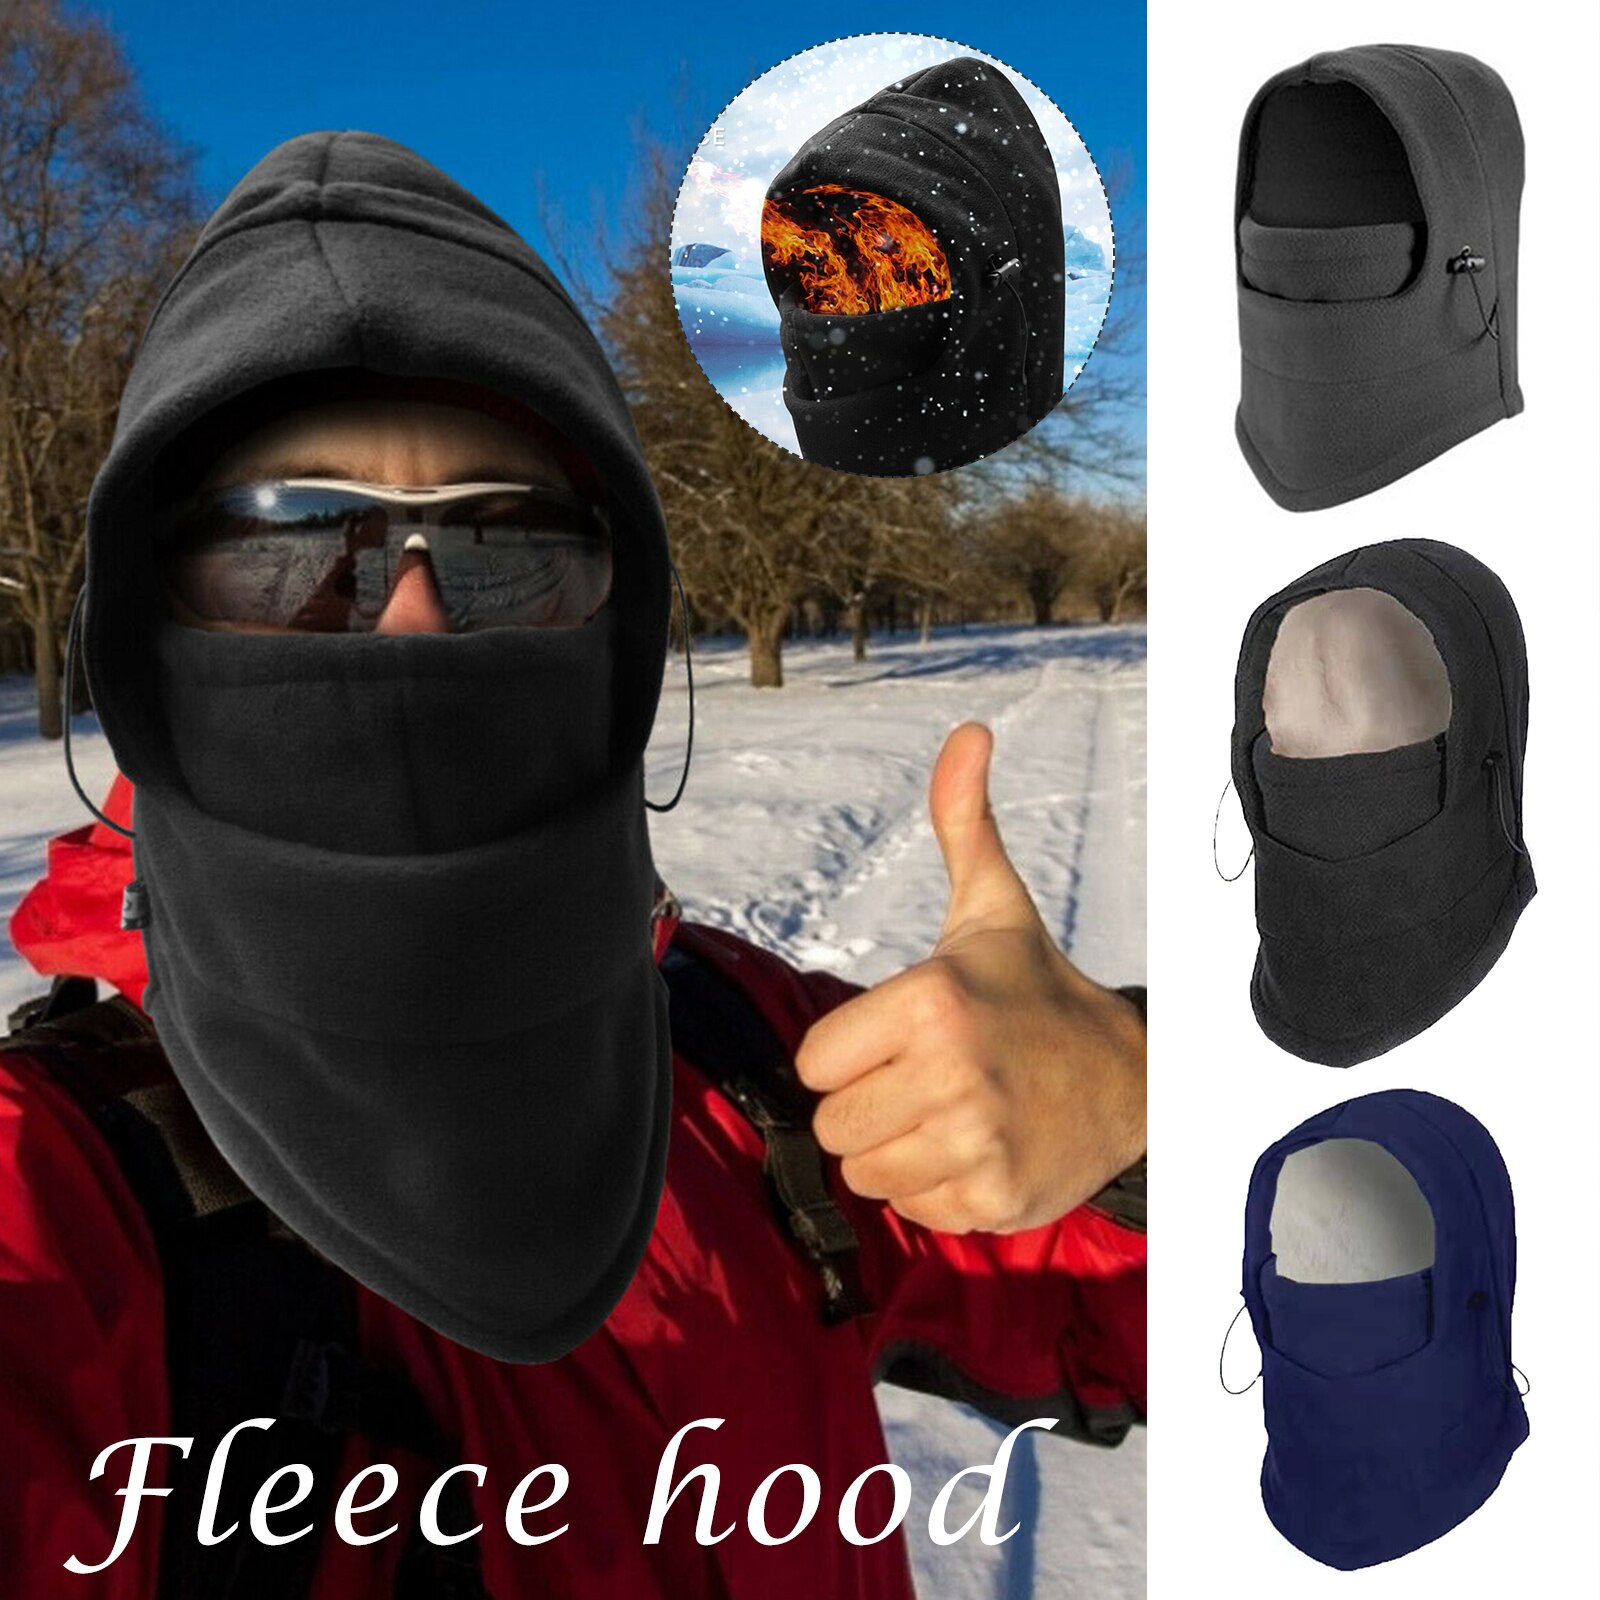 Winter Fleece Nek Warm Bivakmutsen Hoed Gezicht Die Hood Cap Winddicht Ski Hoed Mannen Vrouwen & T8